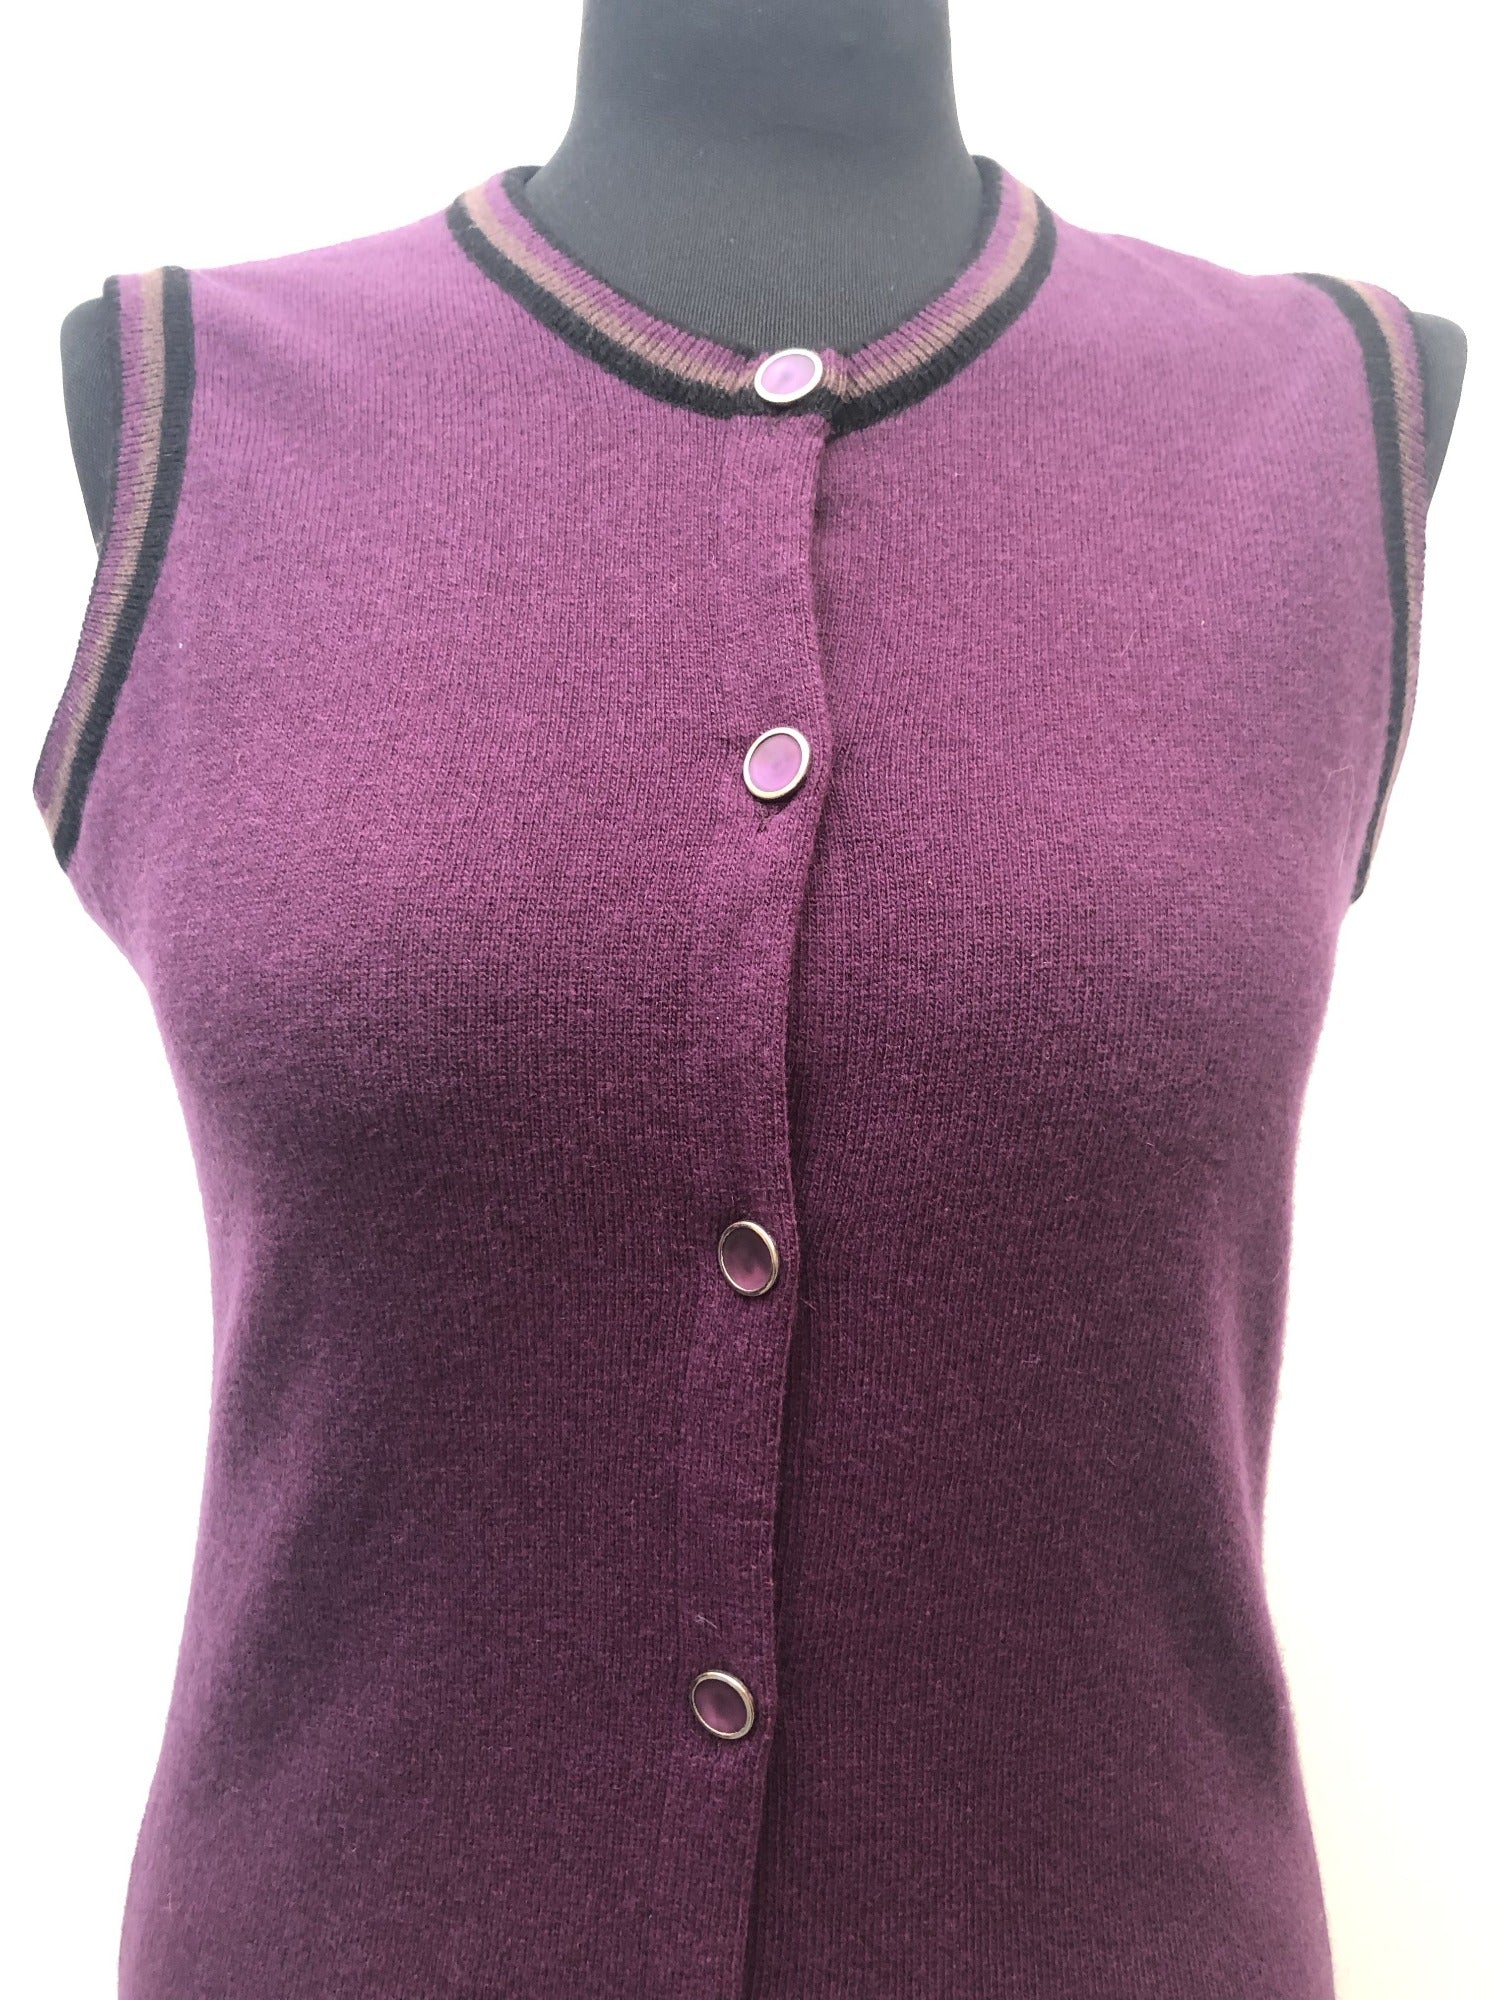 Workwear  womens  vest  Urban Village Vintage  Tank Top  tank  sweater  Stripes  purple  jaeger  cardigan  70s  1970s  12